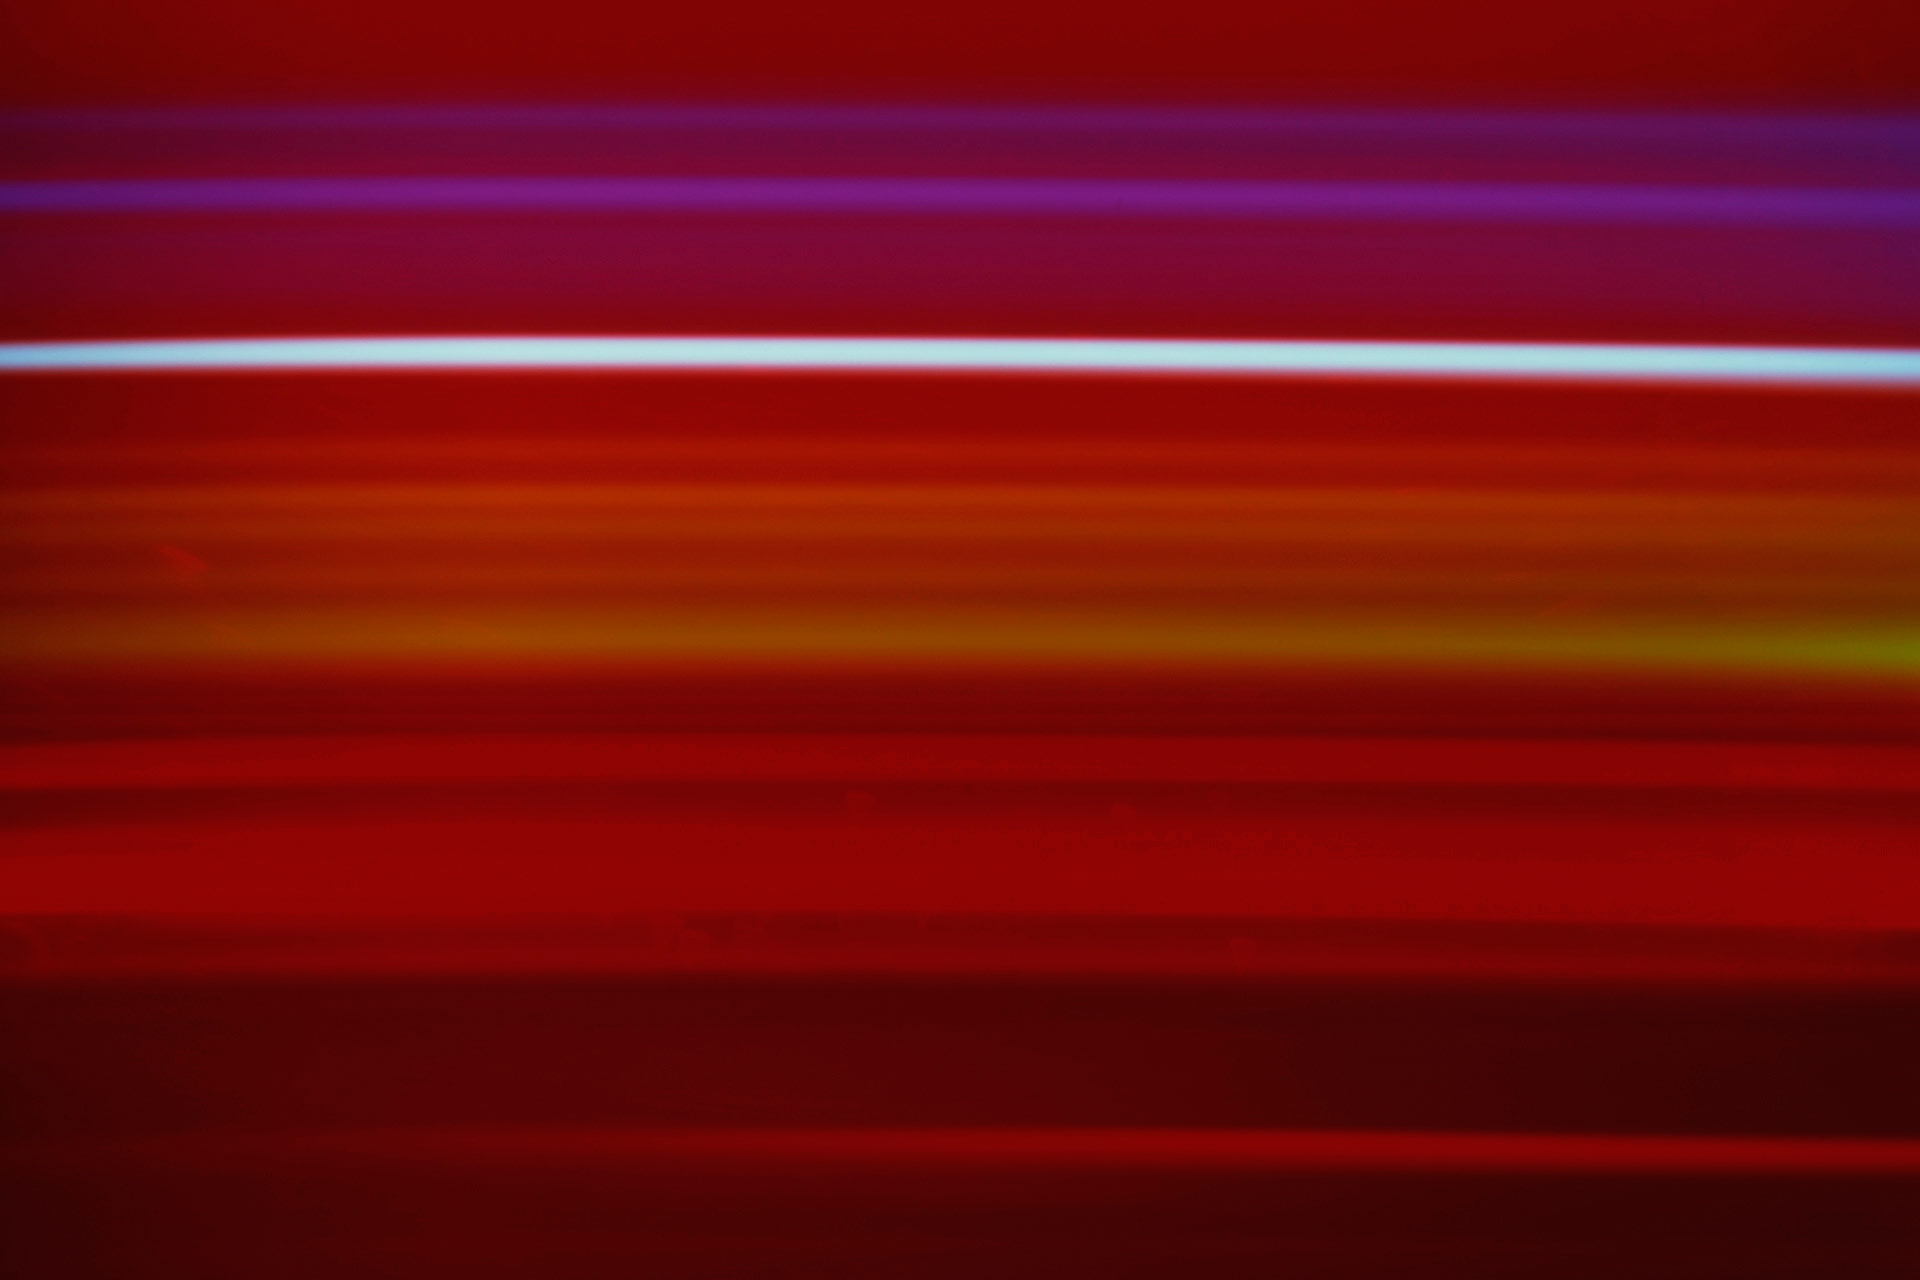 Emission Spectrum of Water Vapour #1